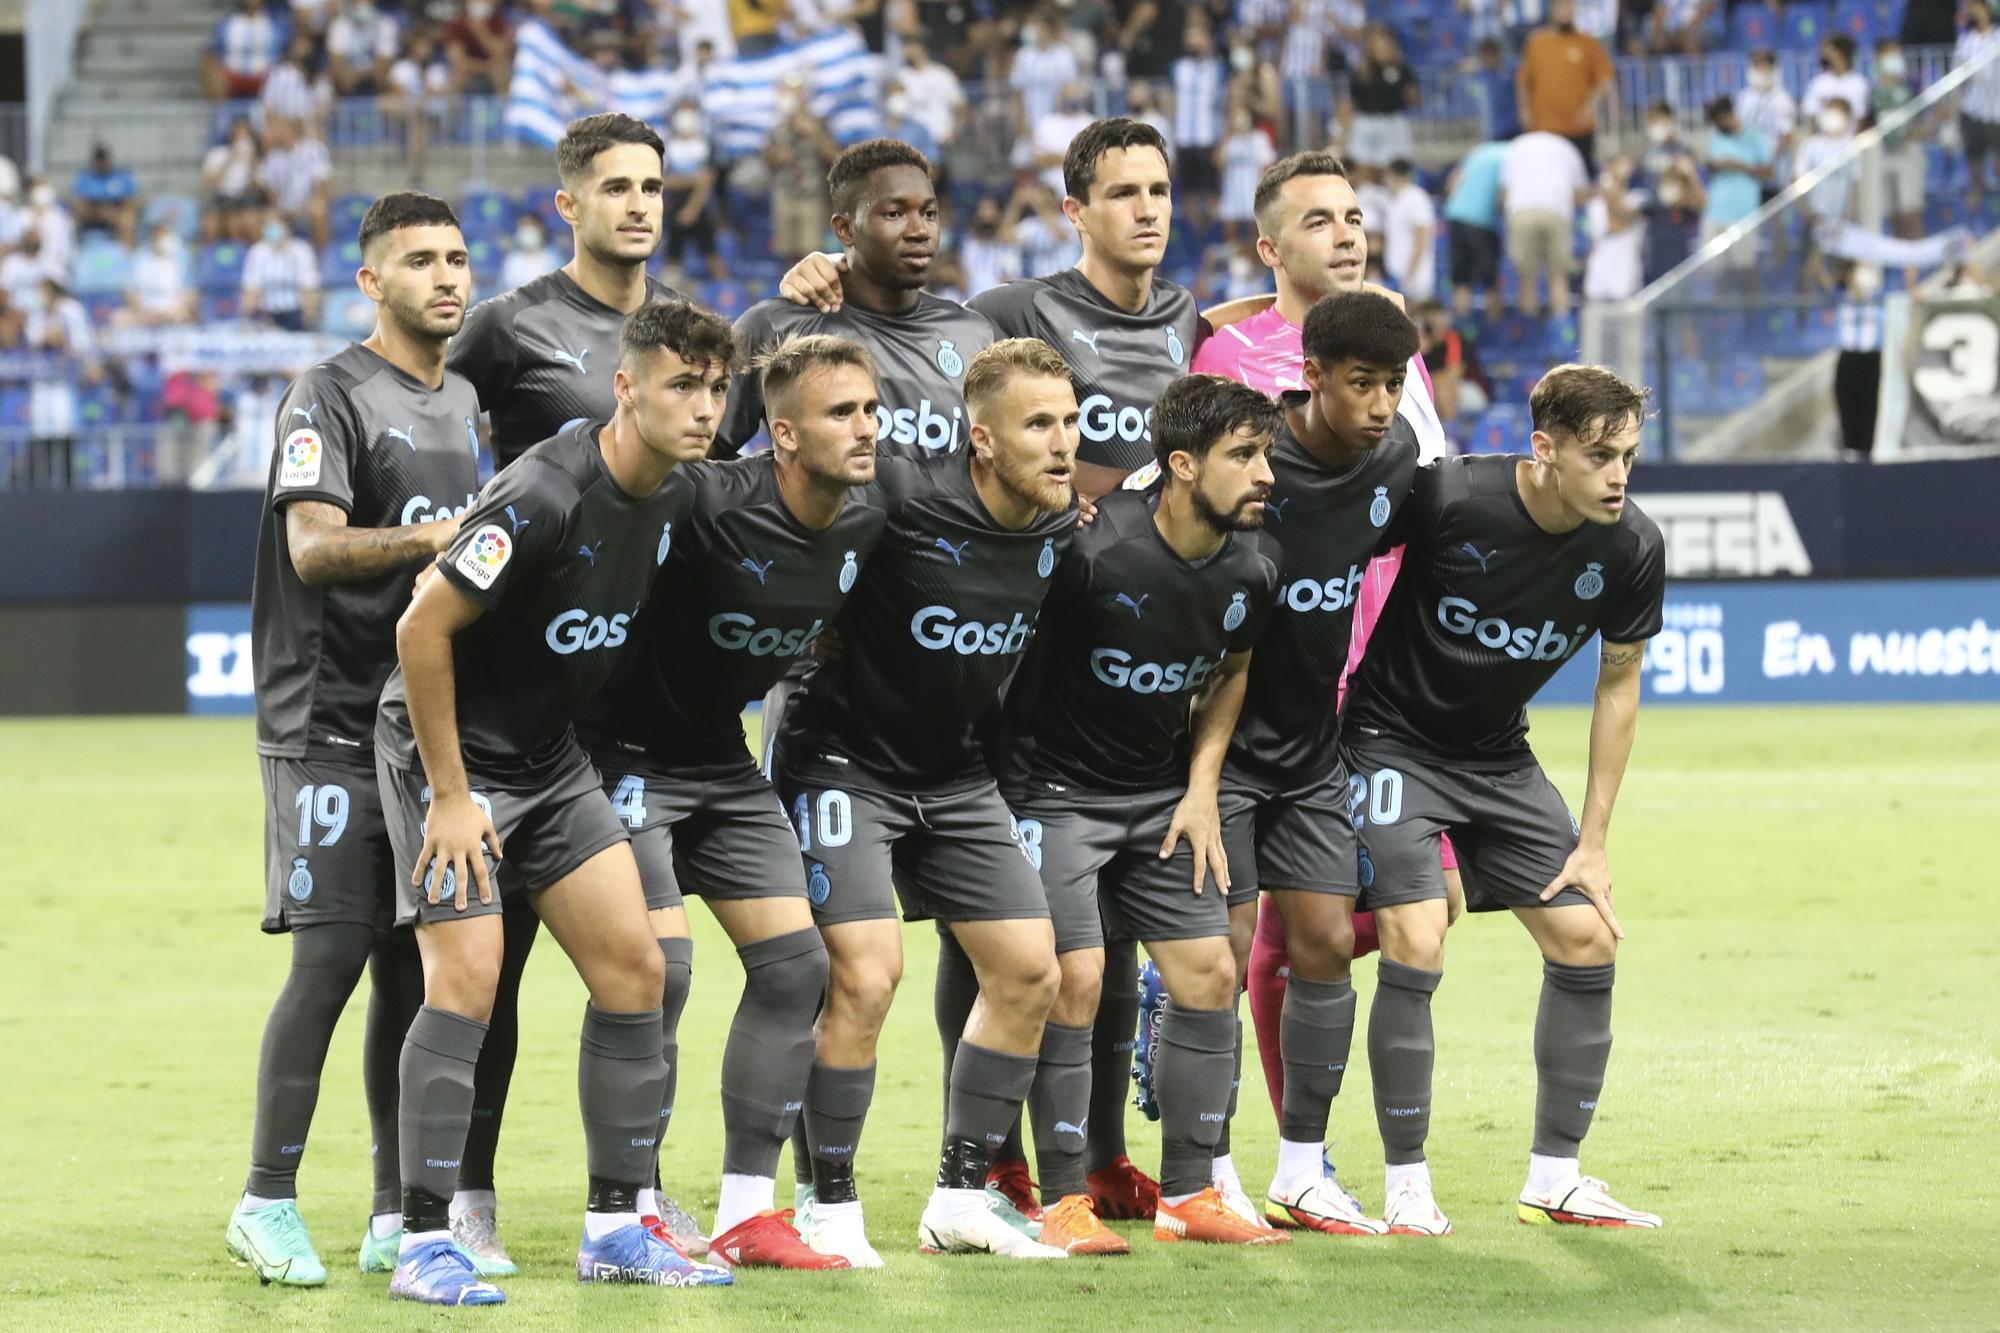 Màlaga - Girona FC, en imatges